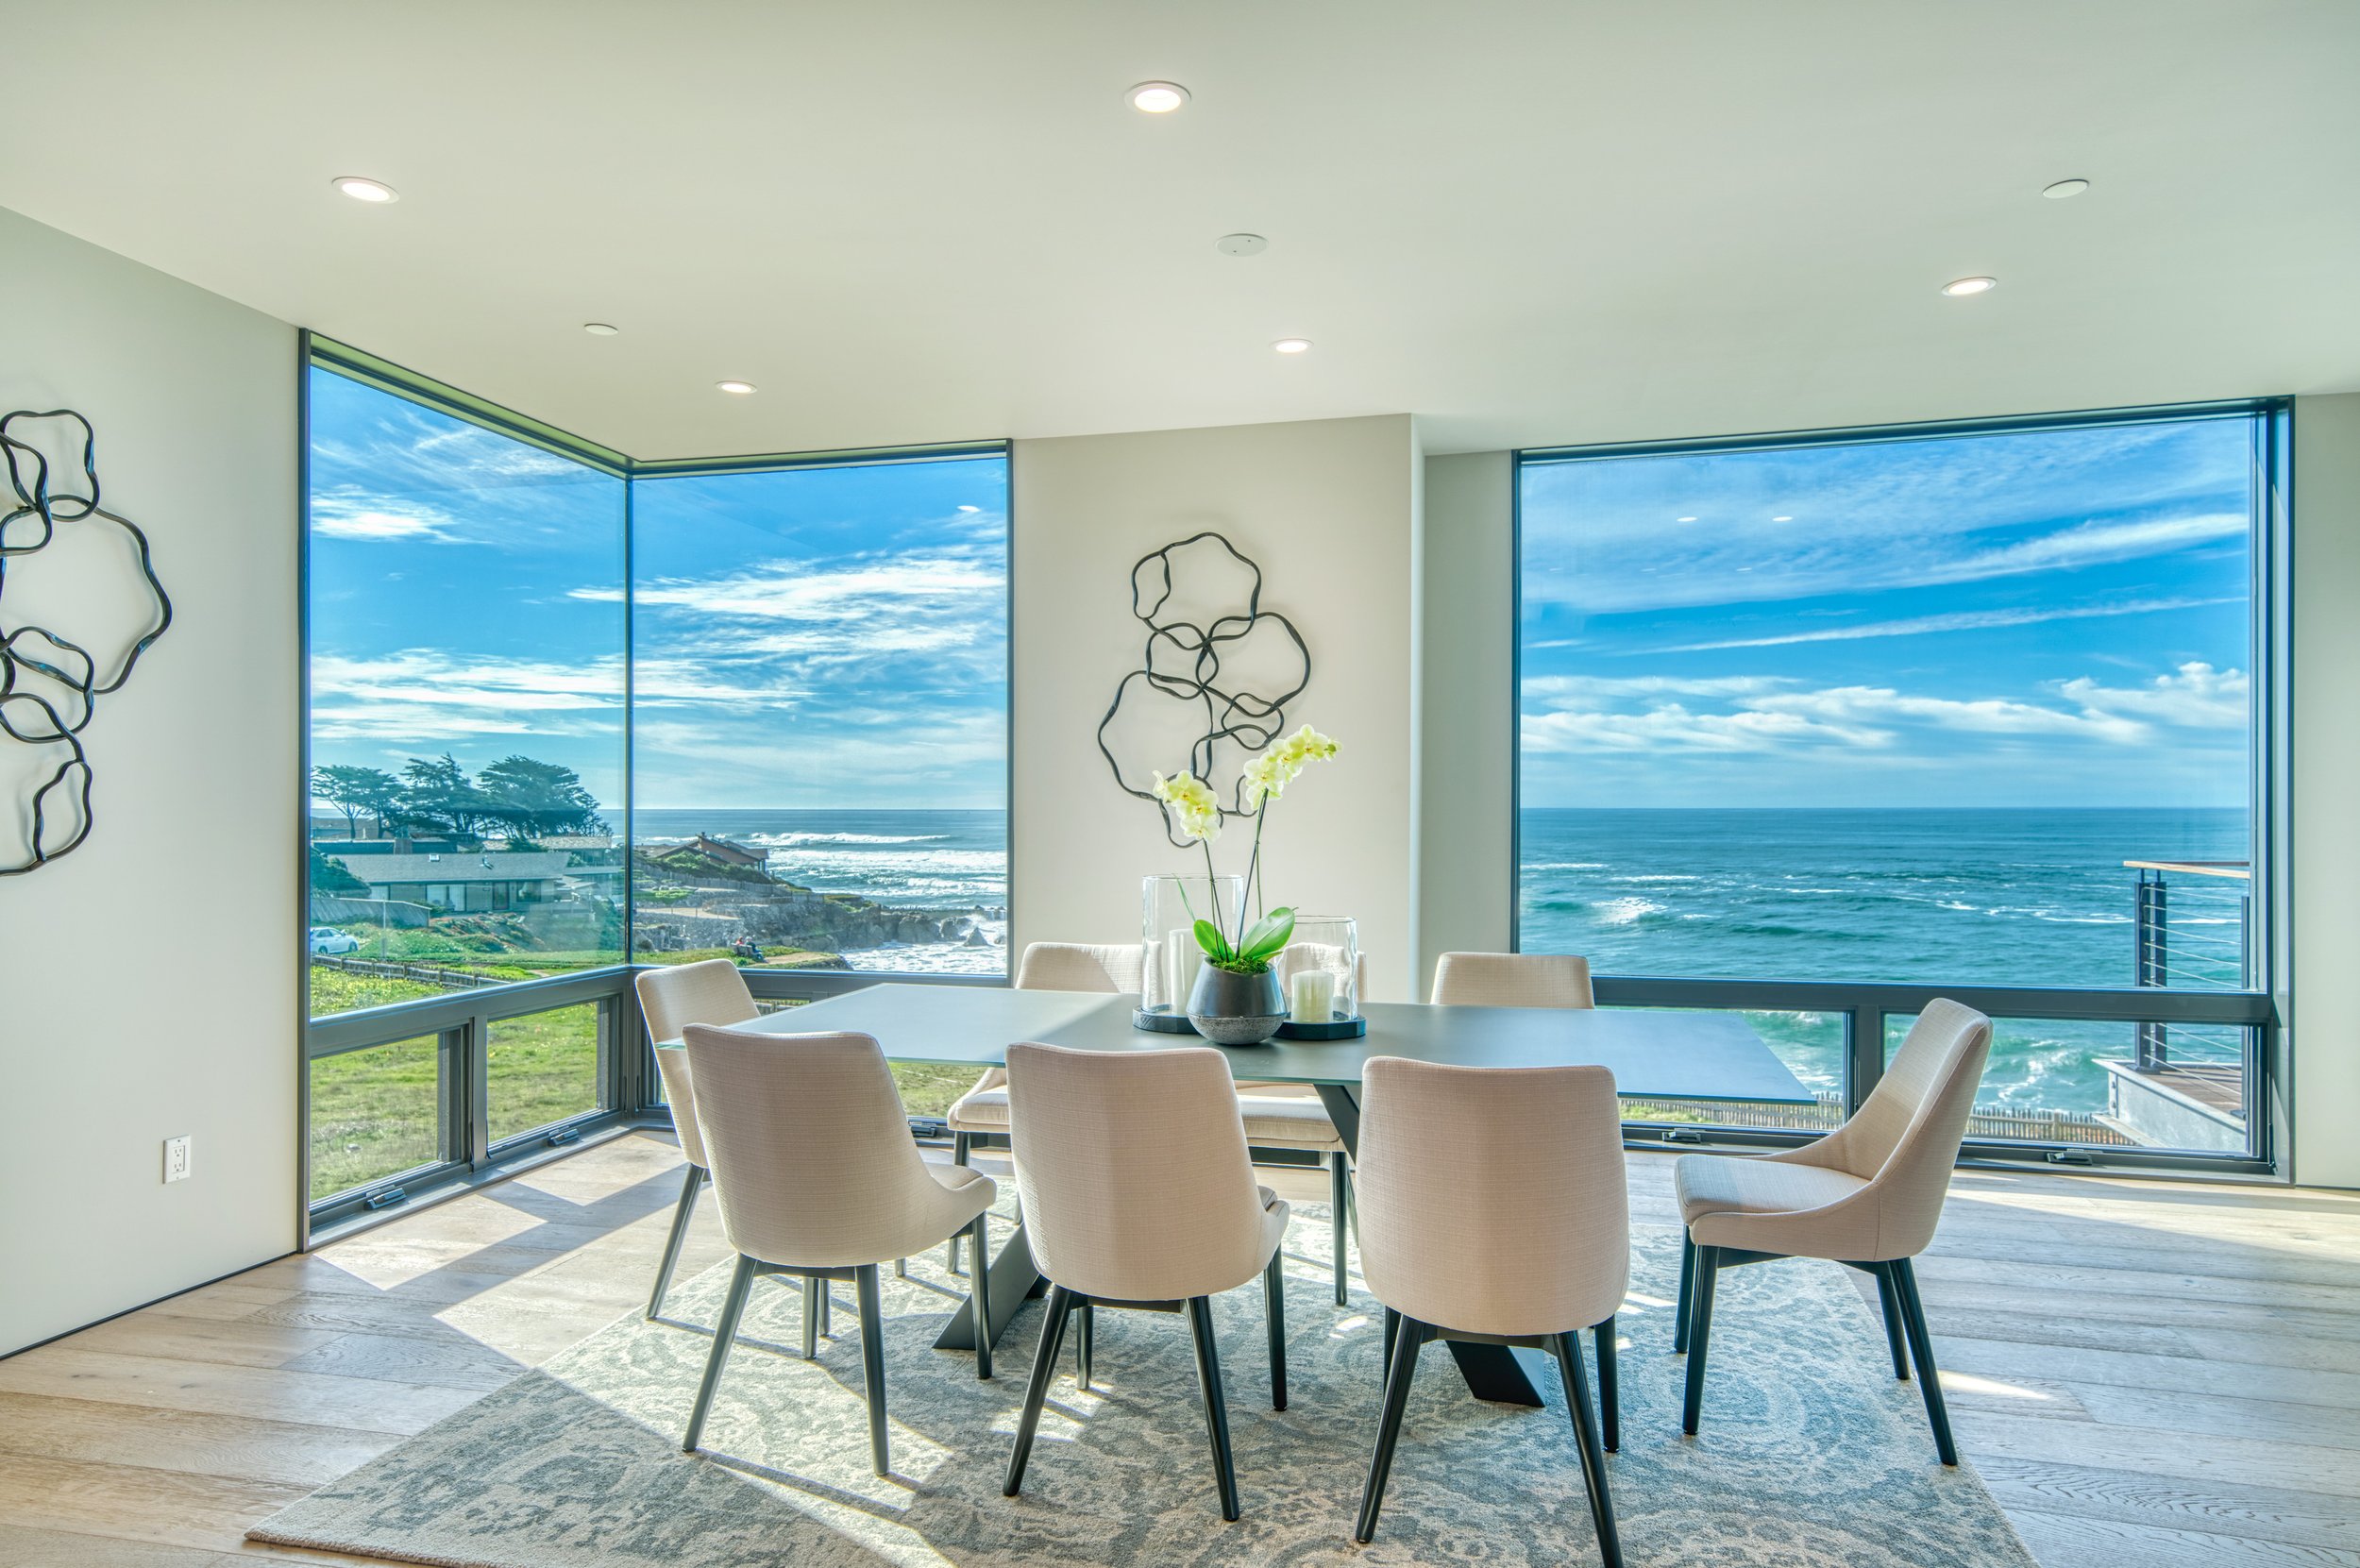 9-dining-room-exspansive-ocean-view-corner-window-unit.jpg